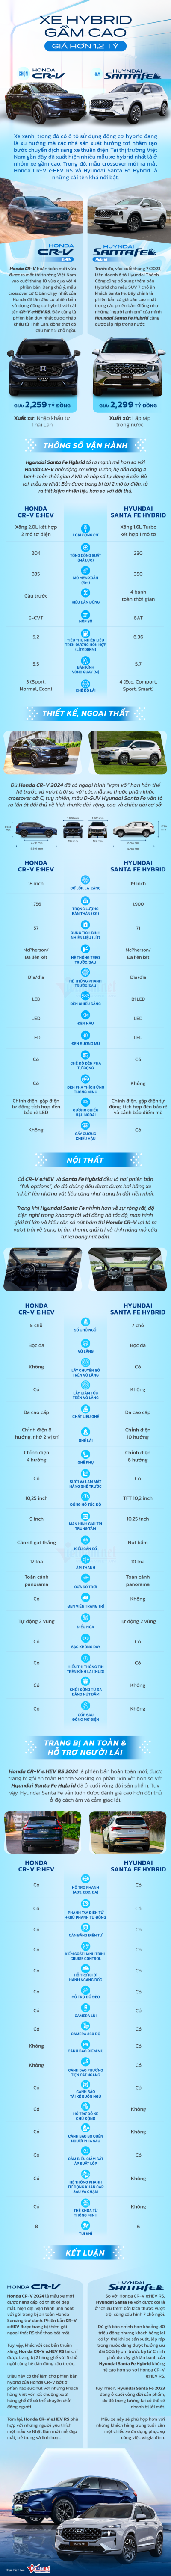 Xe hybrid gầm cao giá hơn 1,2 tỷ: Chọn Honda CR-V hay Huyndai Santa Fe?